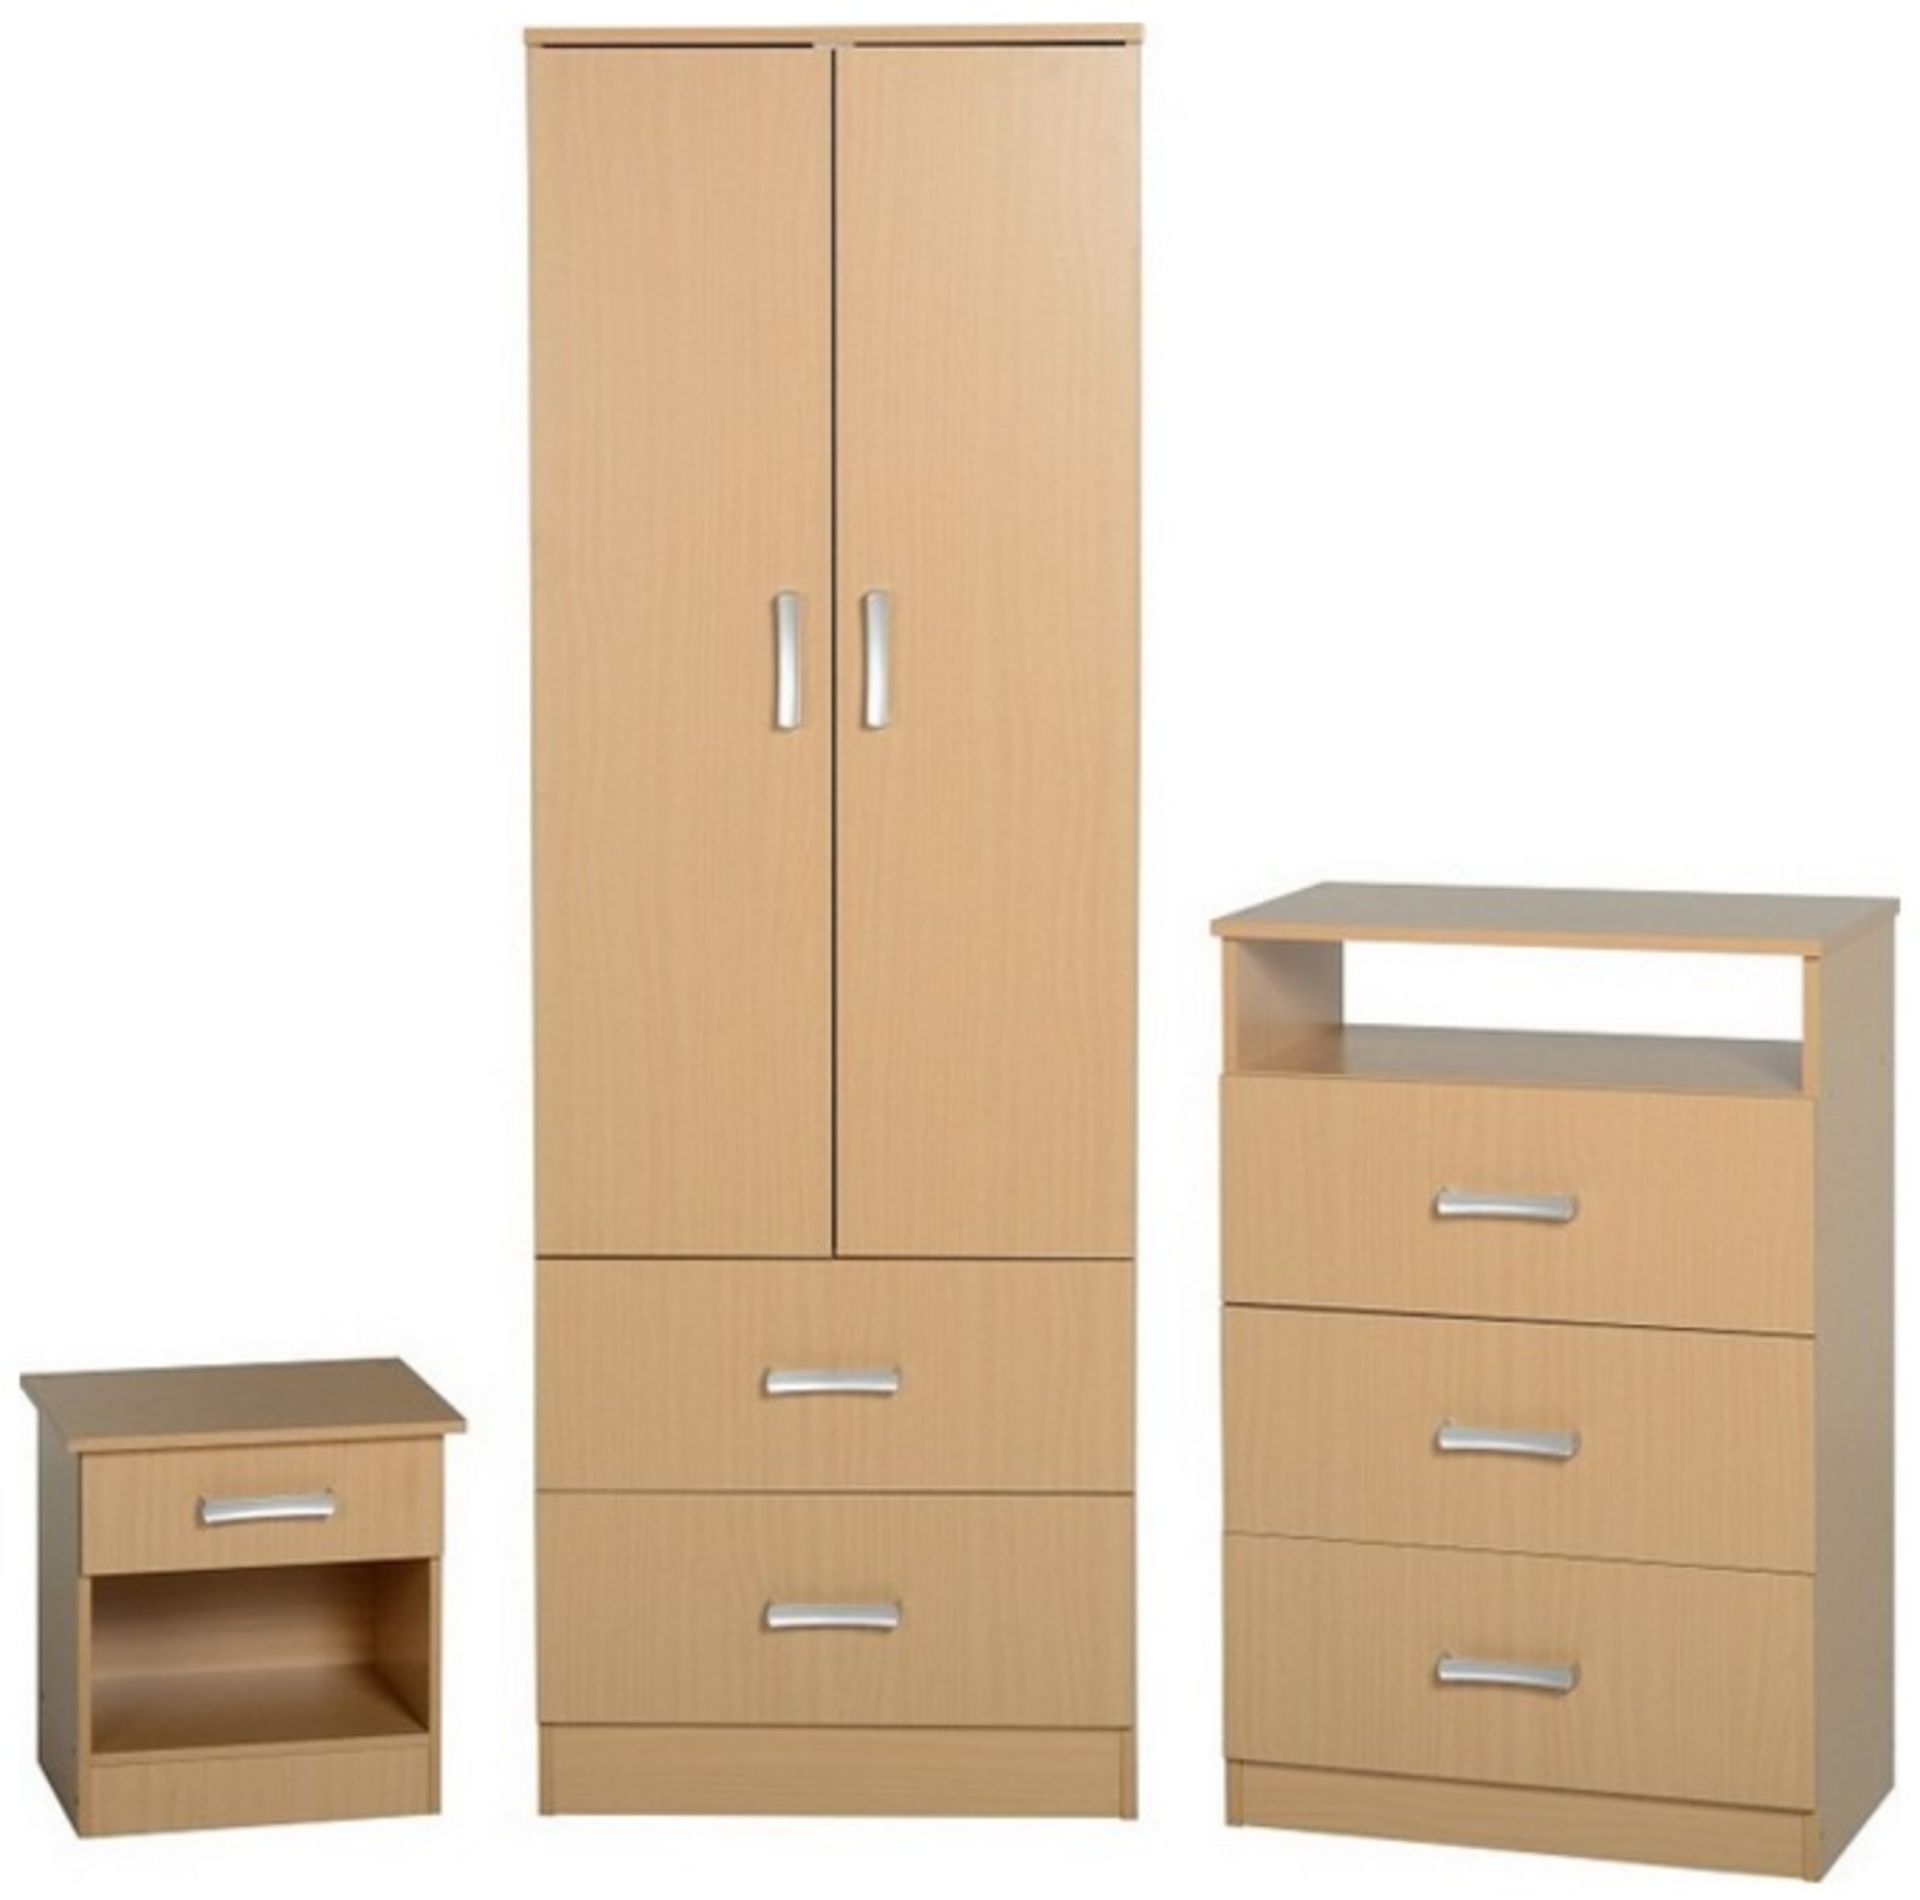 1 x Polar 3-Piece Beech Bedroom Furniture Set -  Includes Wardrobe, Chest & Cabinet - Brand New &